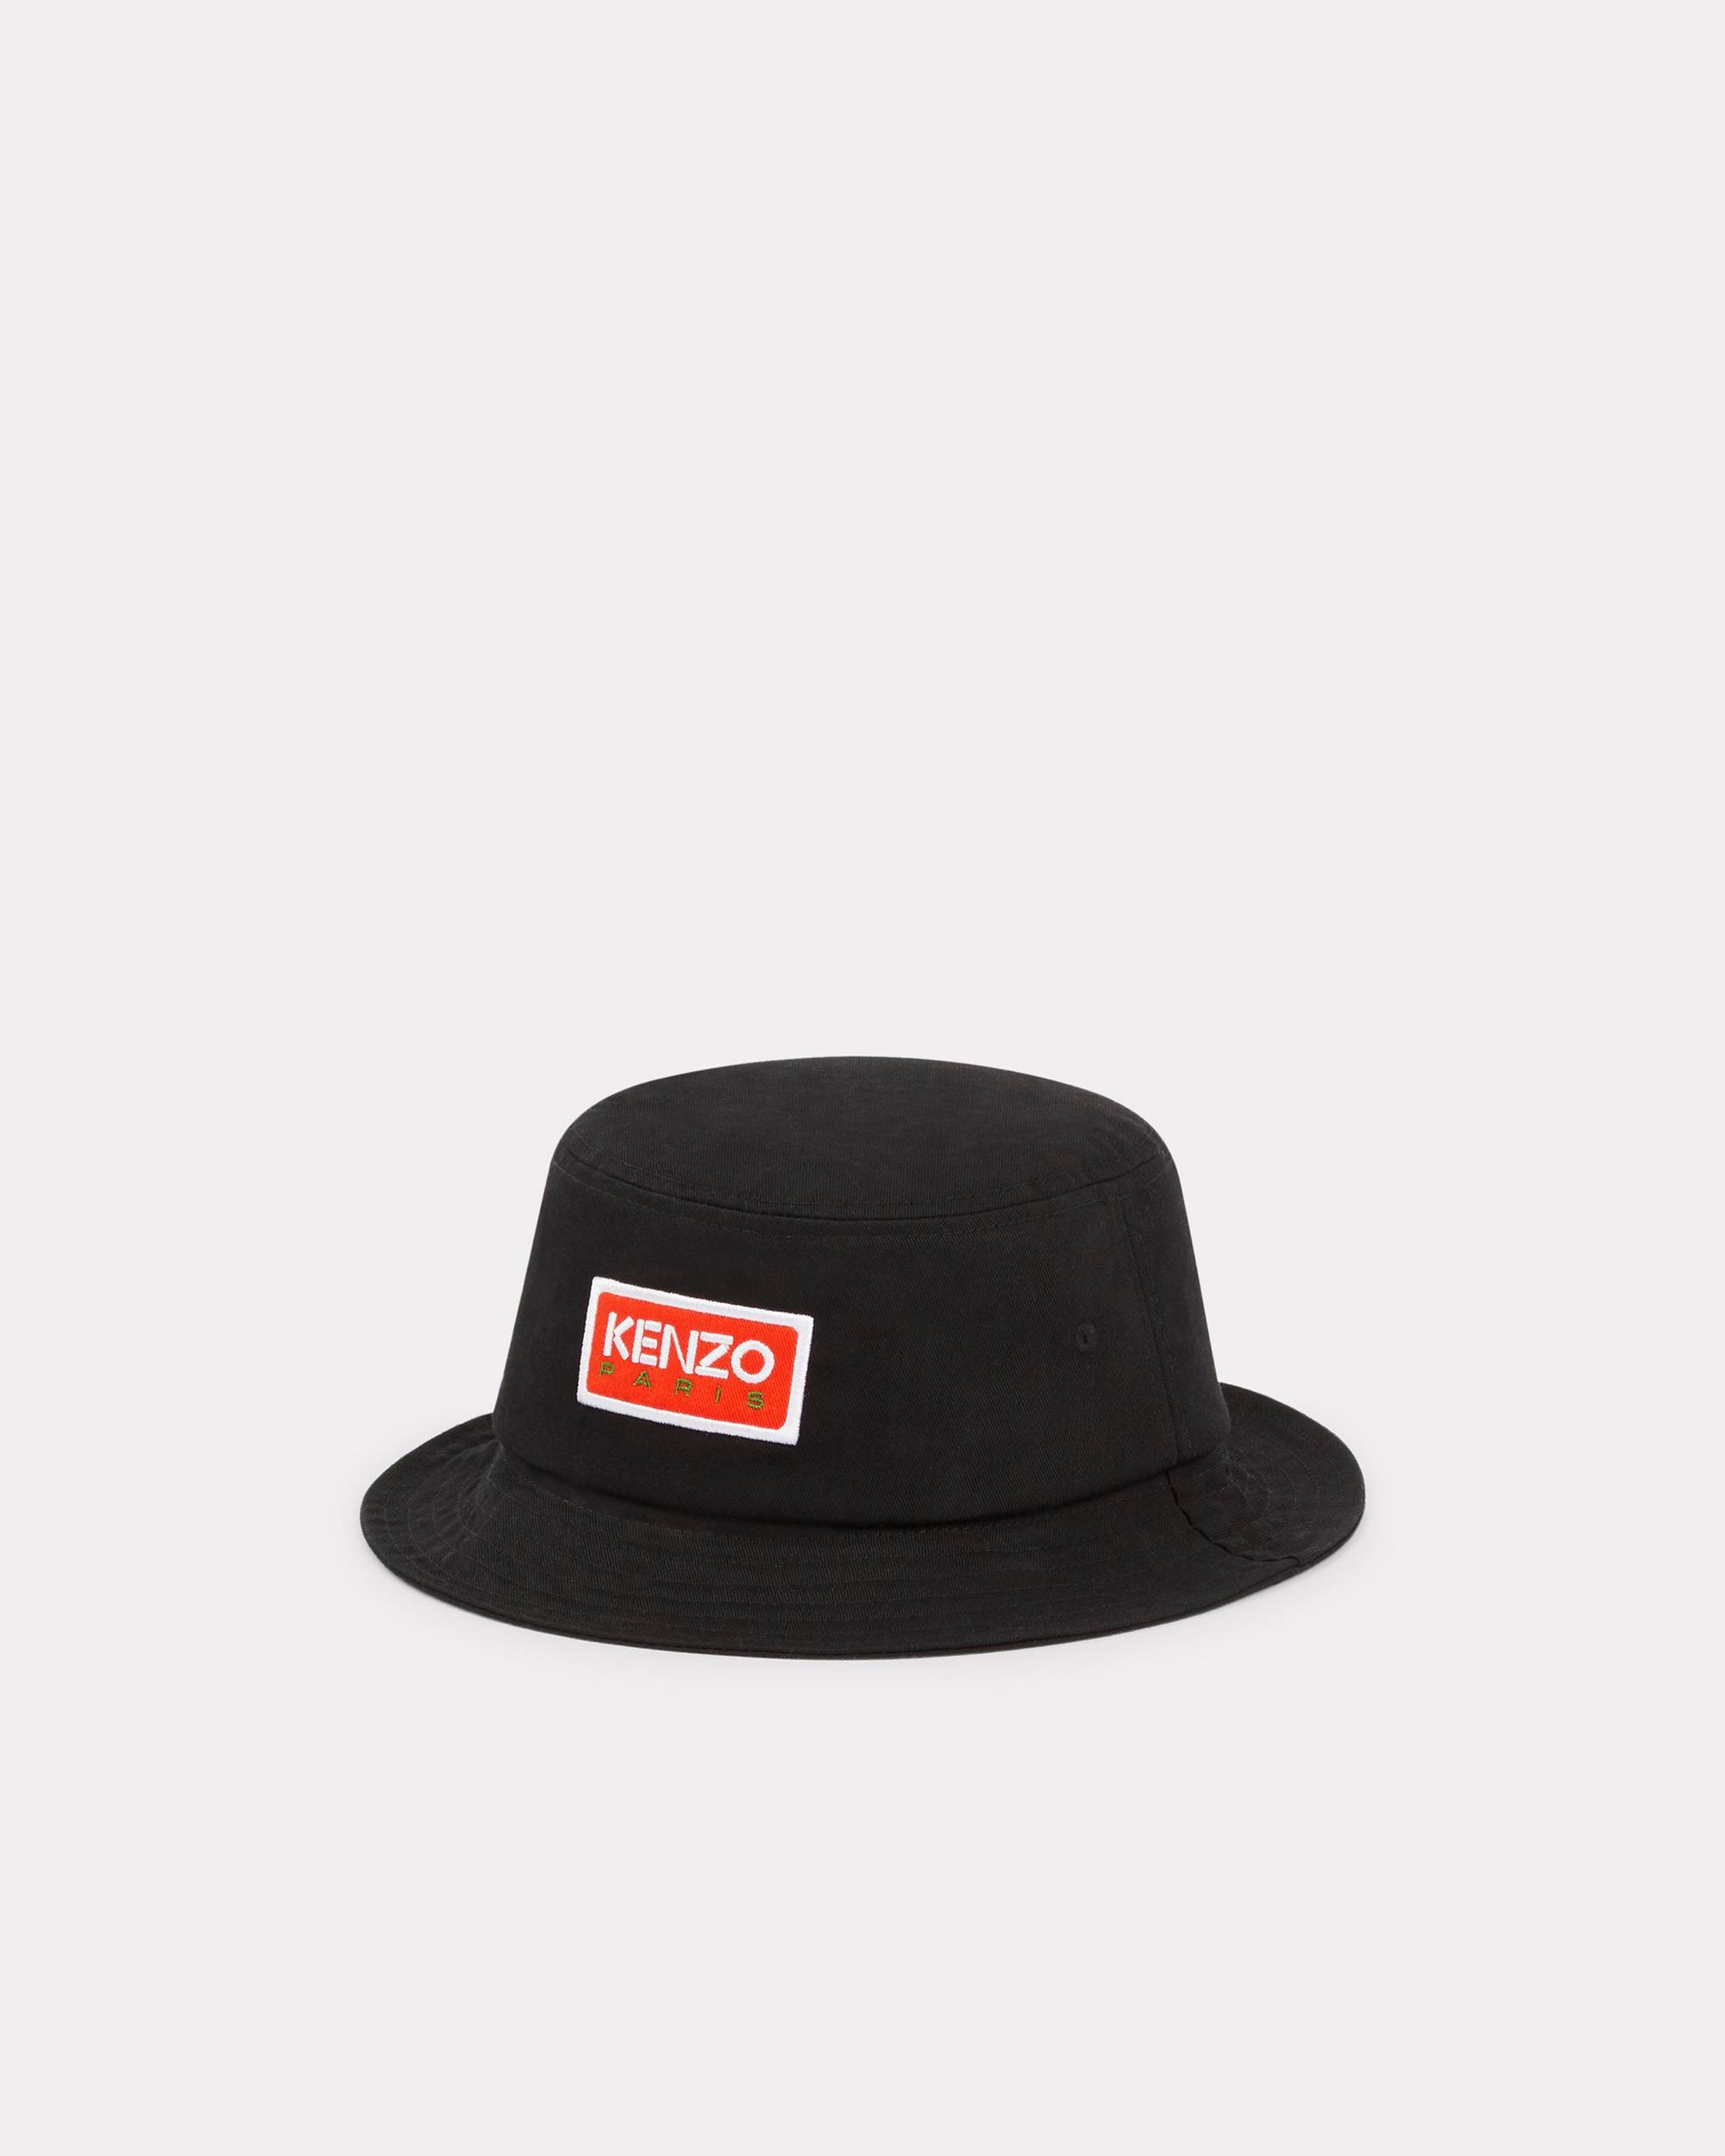 KENZO Paris sun hat - 1